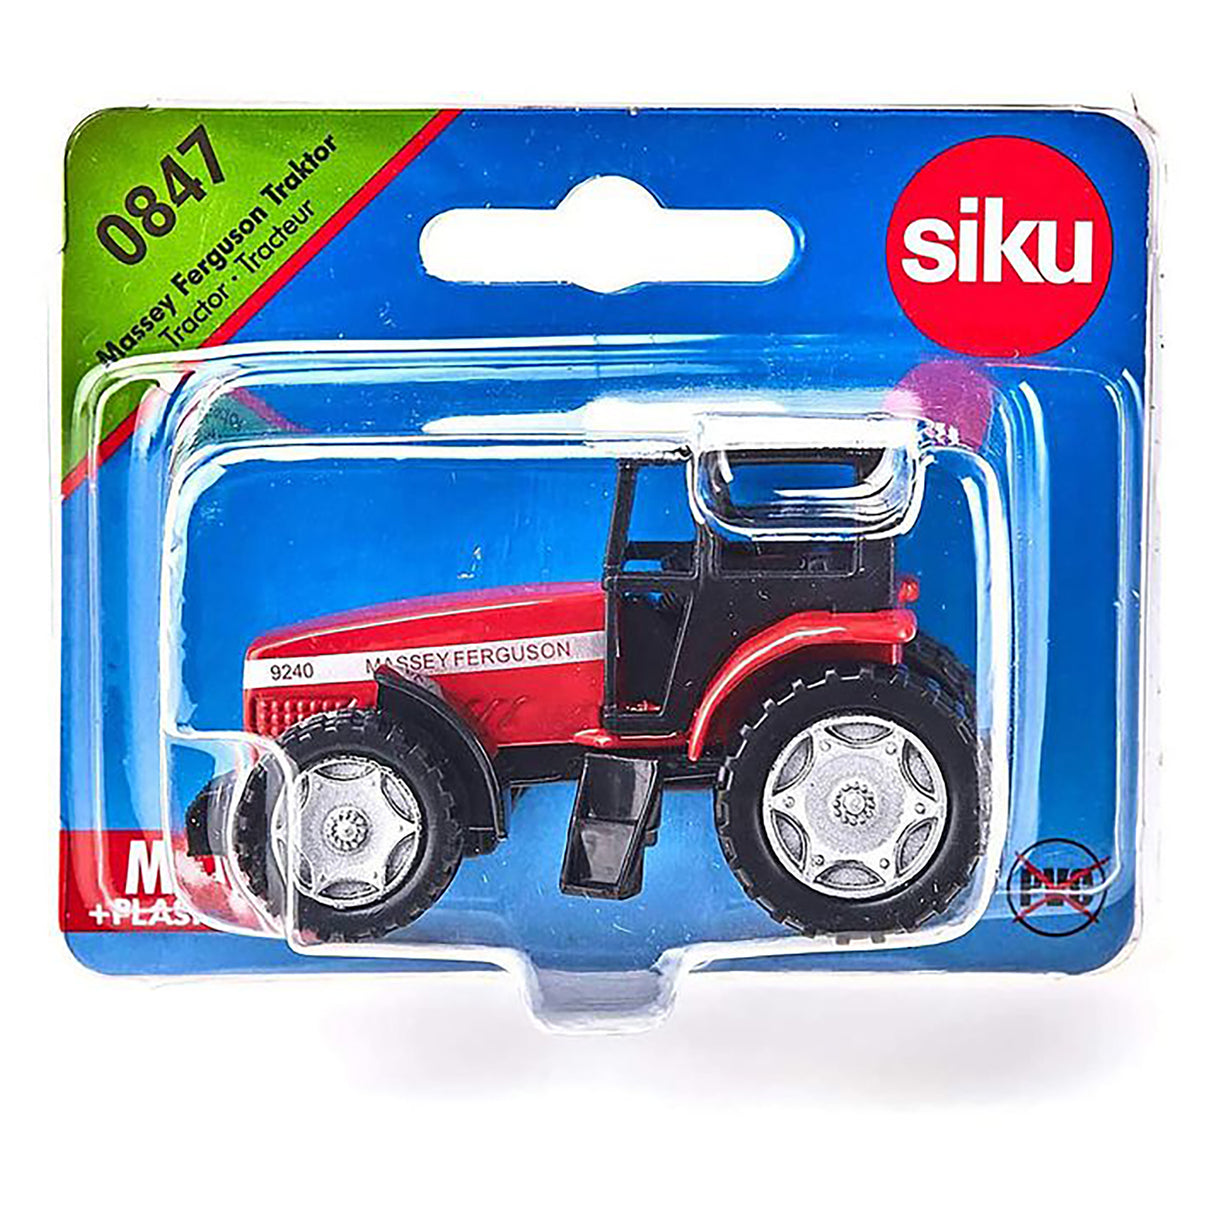 Siku 0847 Die-Cast Vehicle - Massey Ferguson Tractor